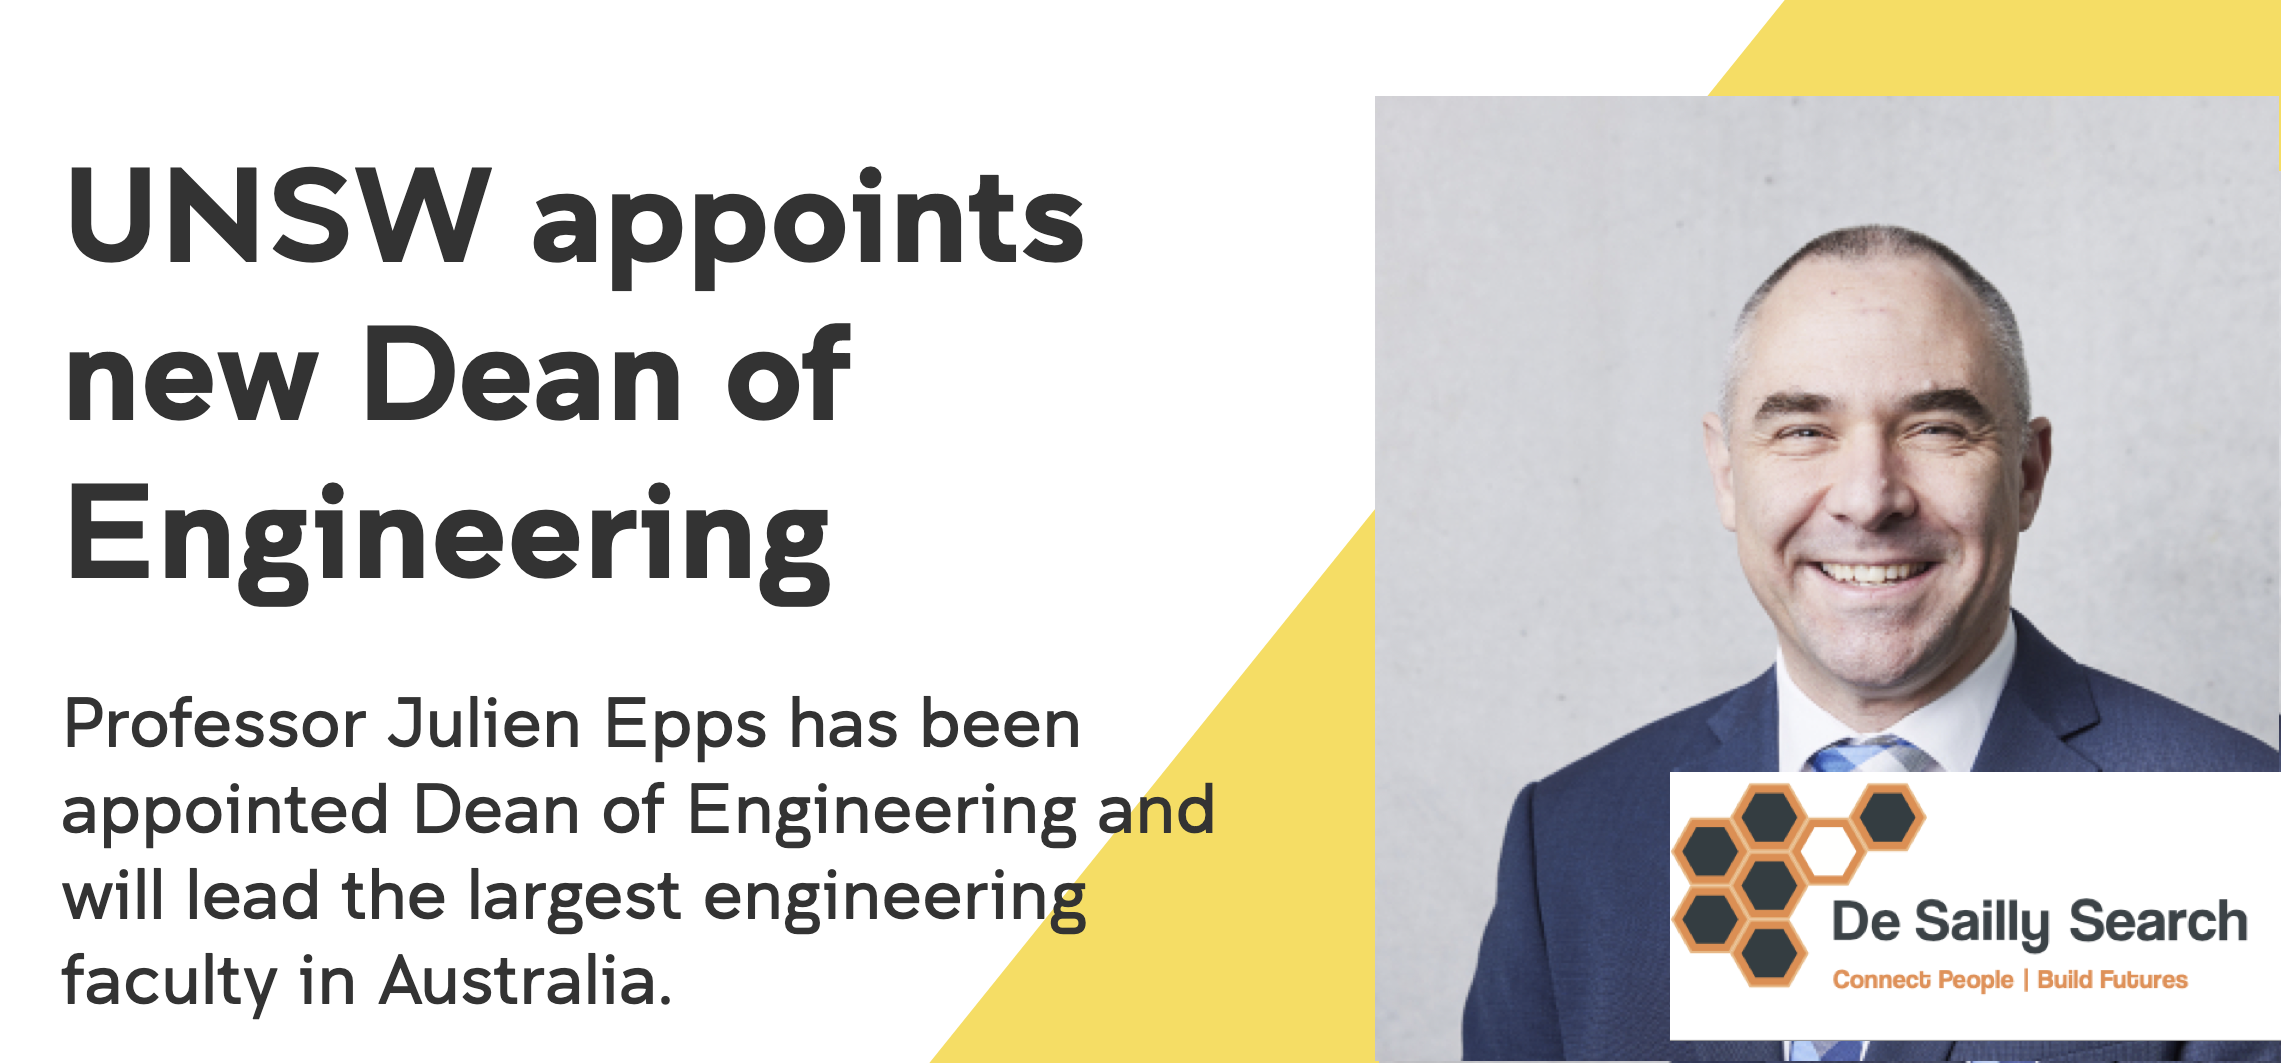 Text: UNSW appoints new Dean of Engineering Professor Julien Epps has been appointed Dean of Engineering and will lead the largest engineering faculty in Australia. Photo of Professor Julien Epps